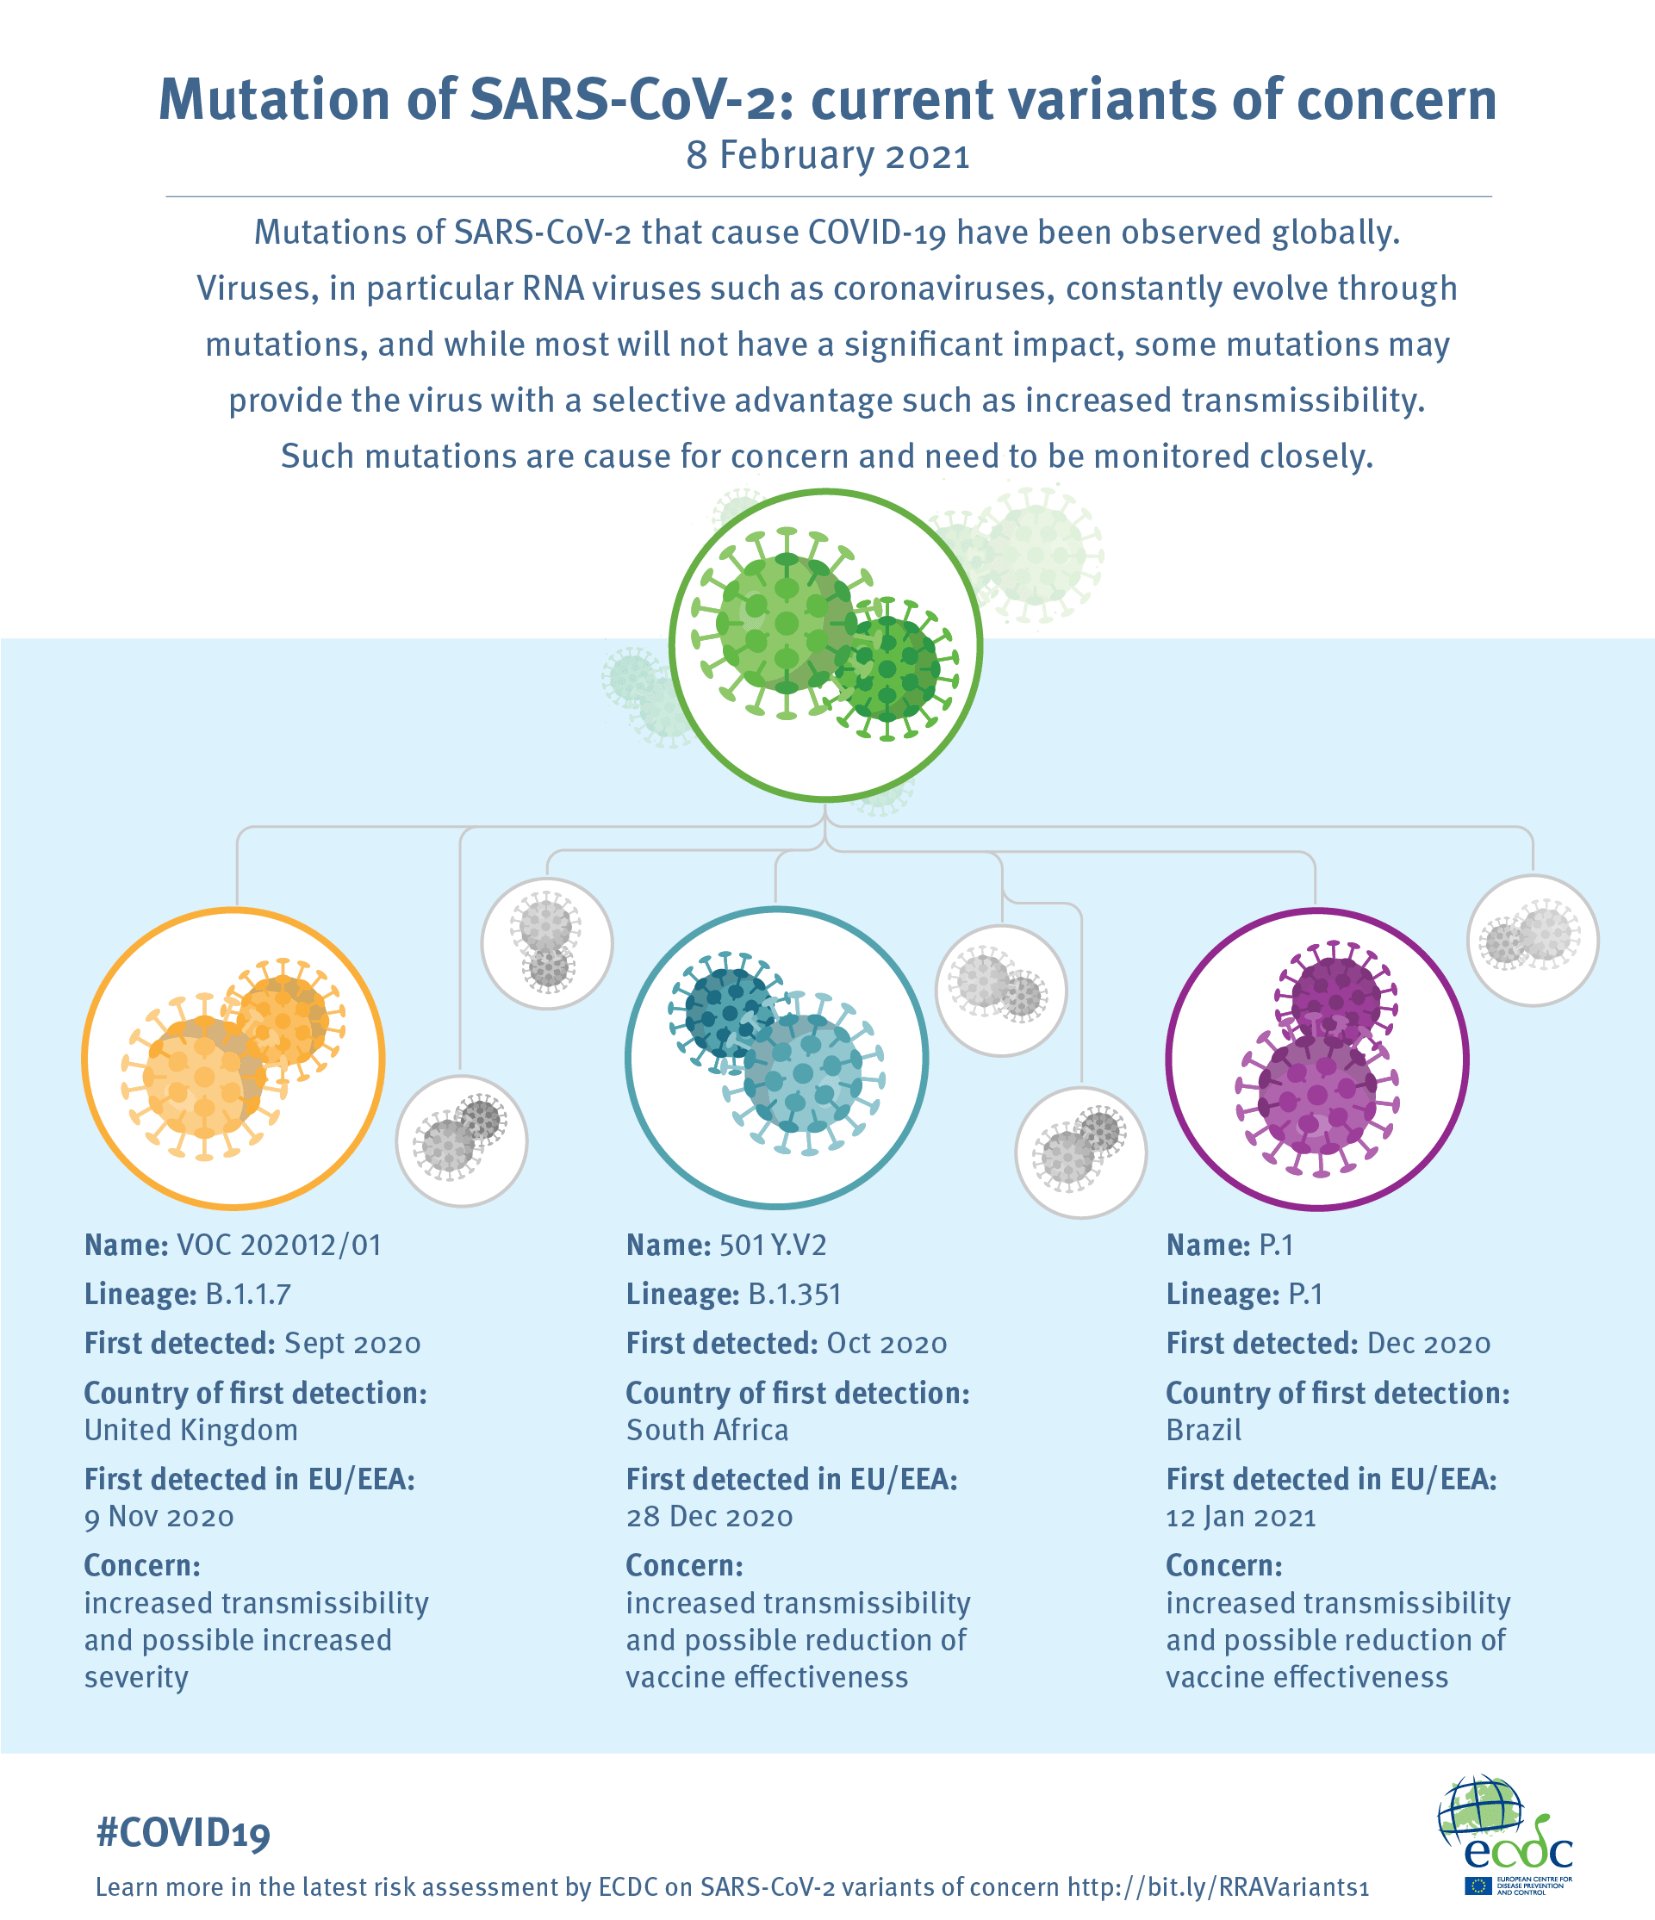 An infographic describing three SARS-CoV-2 variants of concern